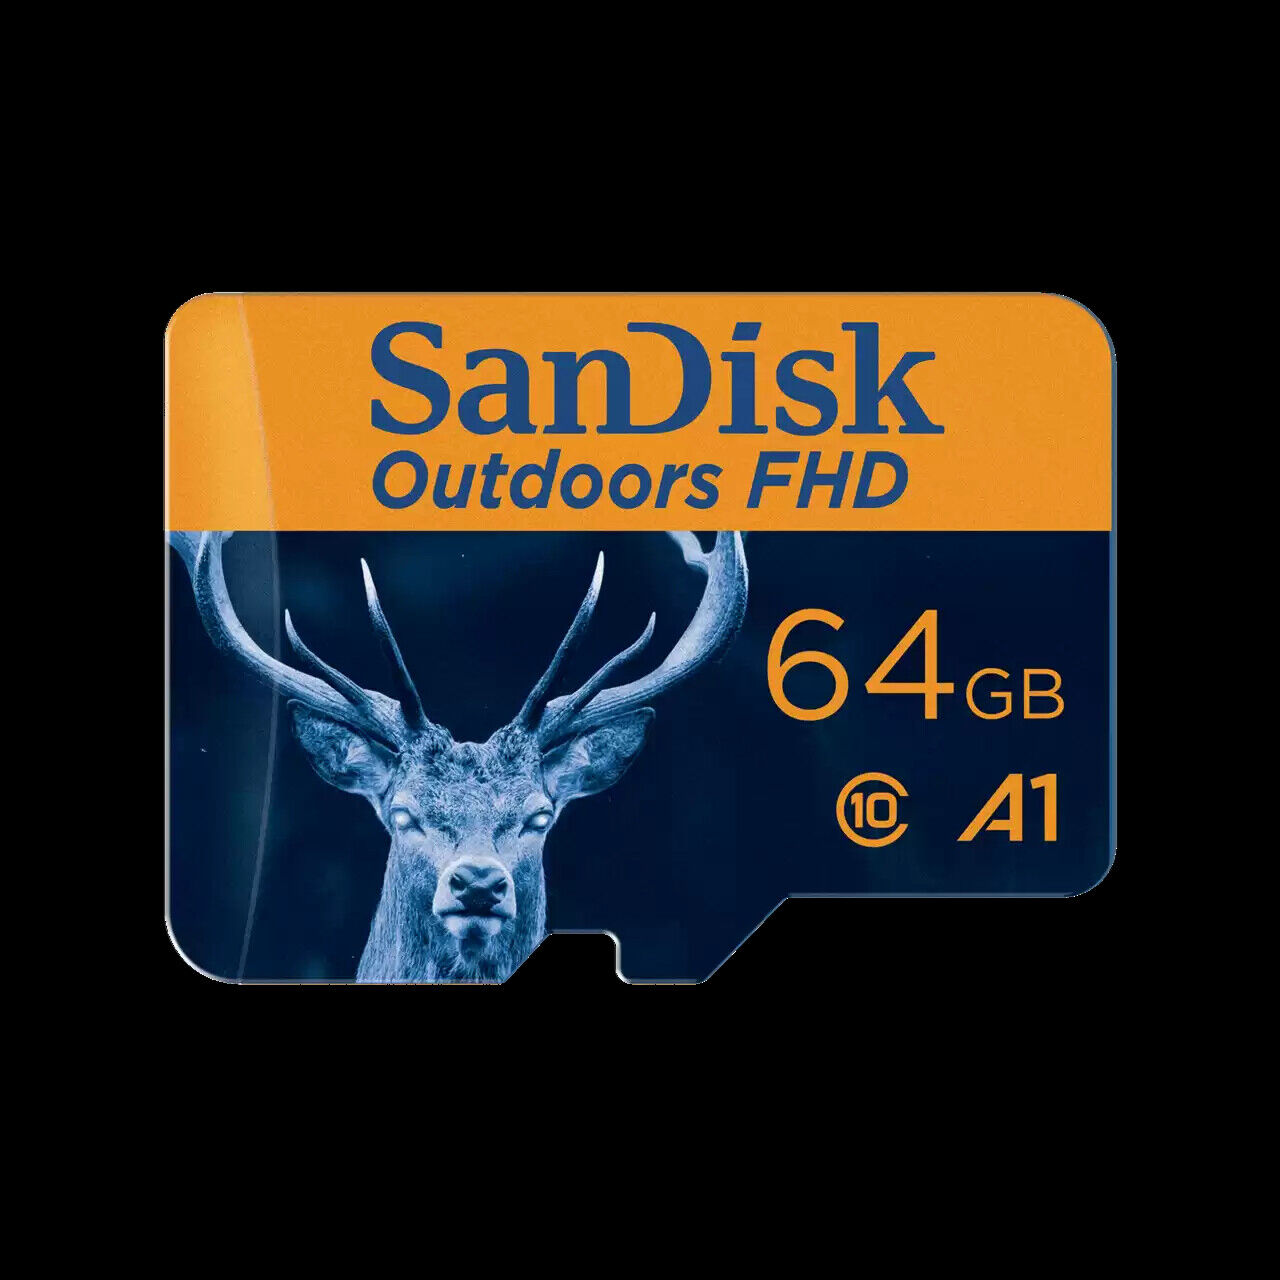 SanDisk 64GB Outdoors FHD microSDXC UHS-I Memory Card - SDSQXAH-064G-GN6VA